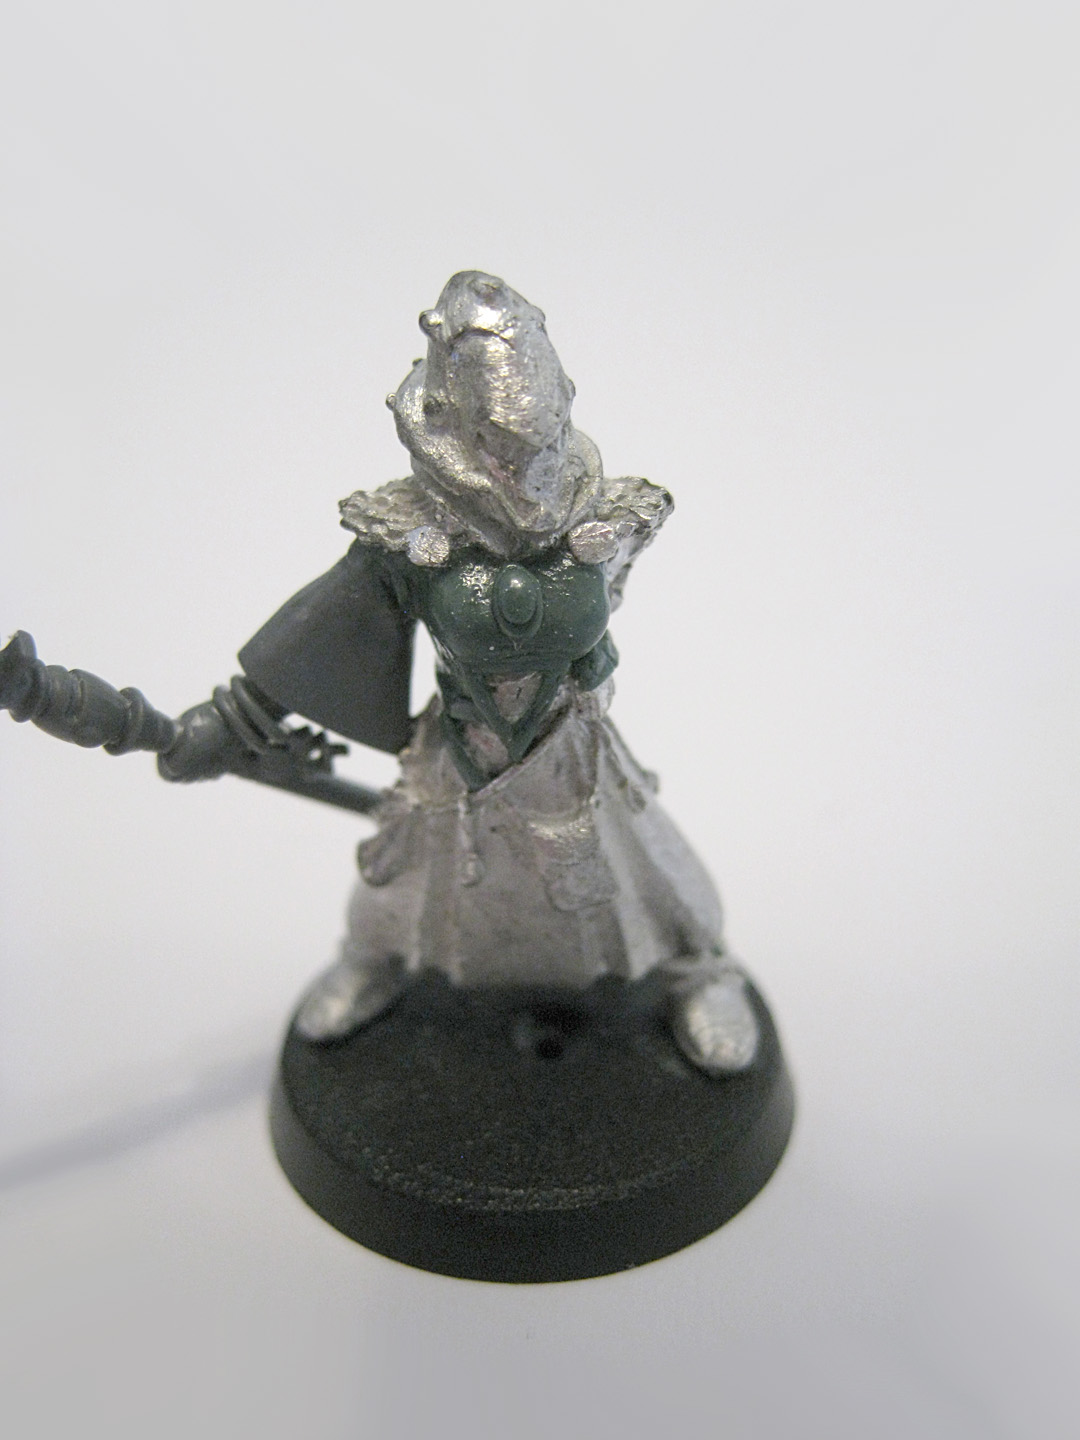 Female Eldar Warlock with singing spear conversion